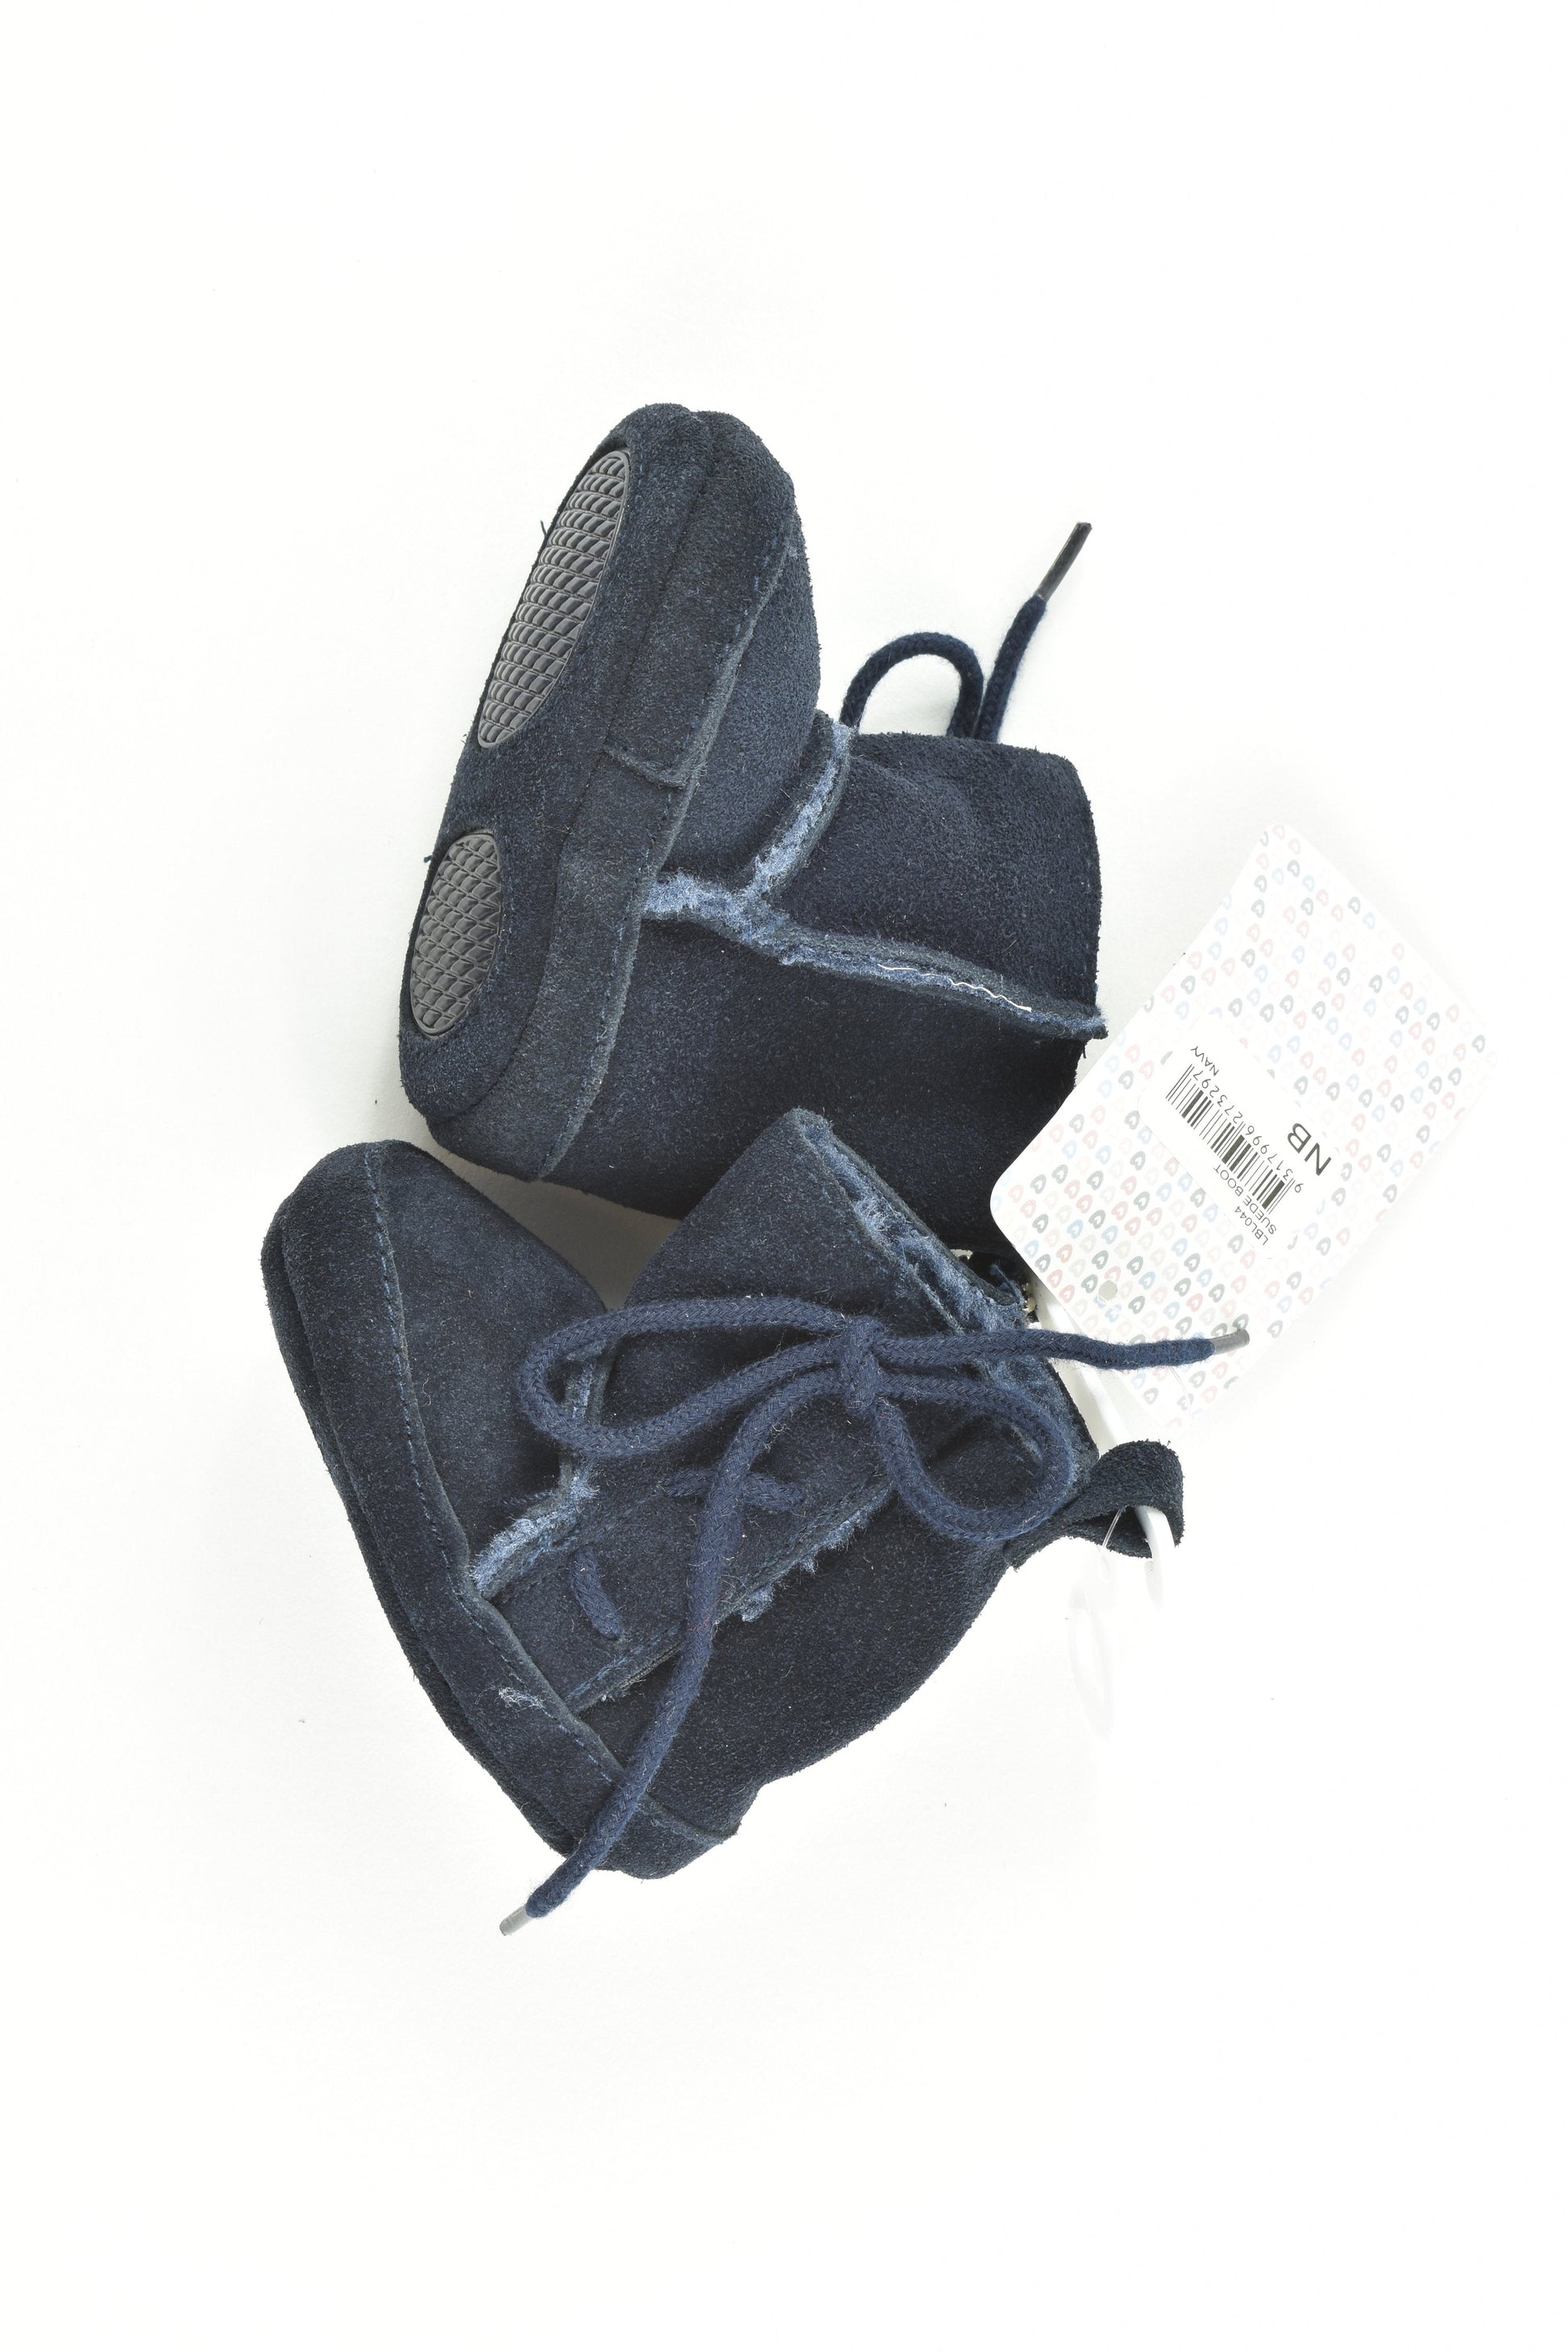 NEW Kaboosh (AU) Size Newborn Leather Suede Boot